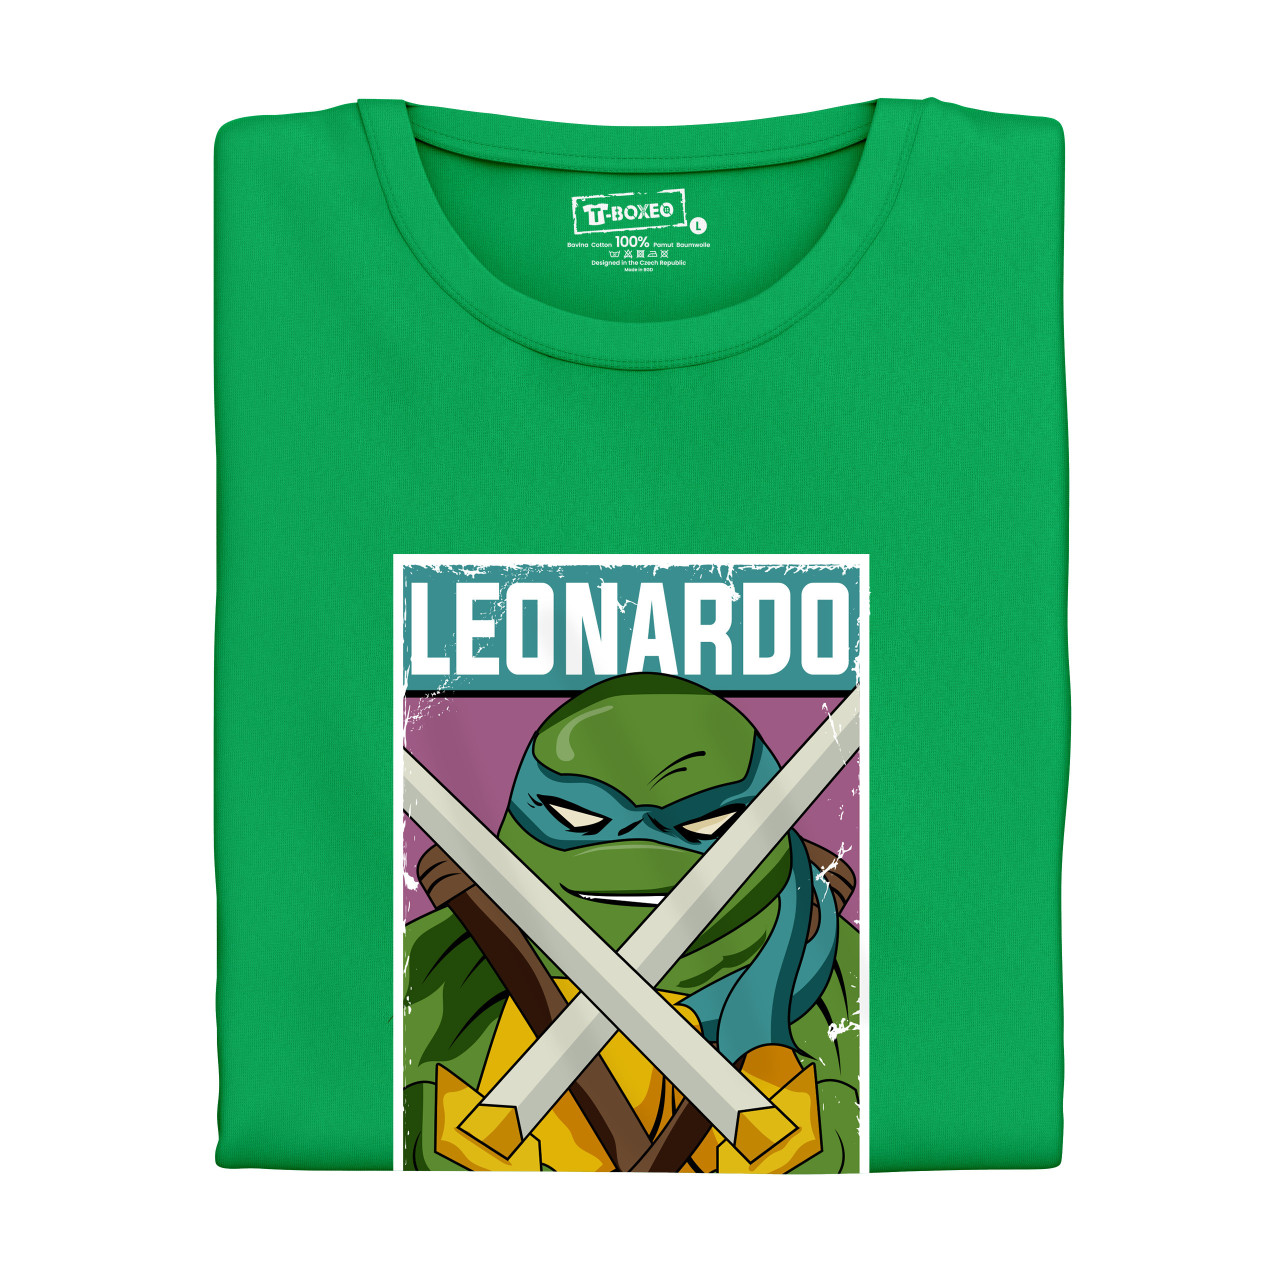 Pánské tričko s potiskem “Leonardo"